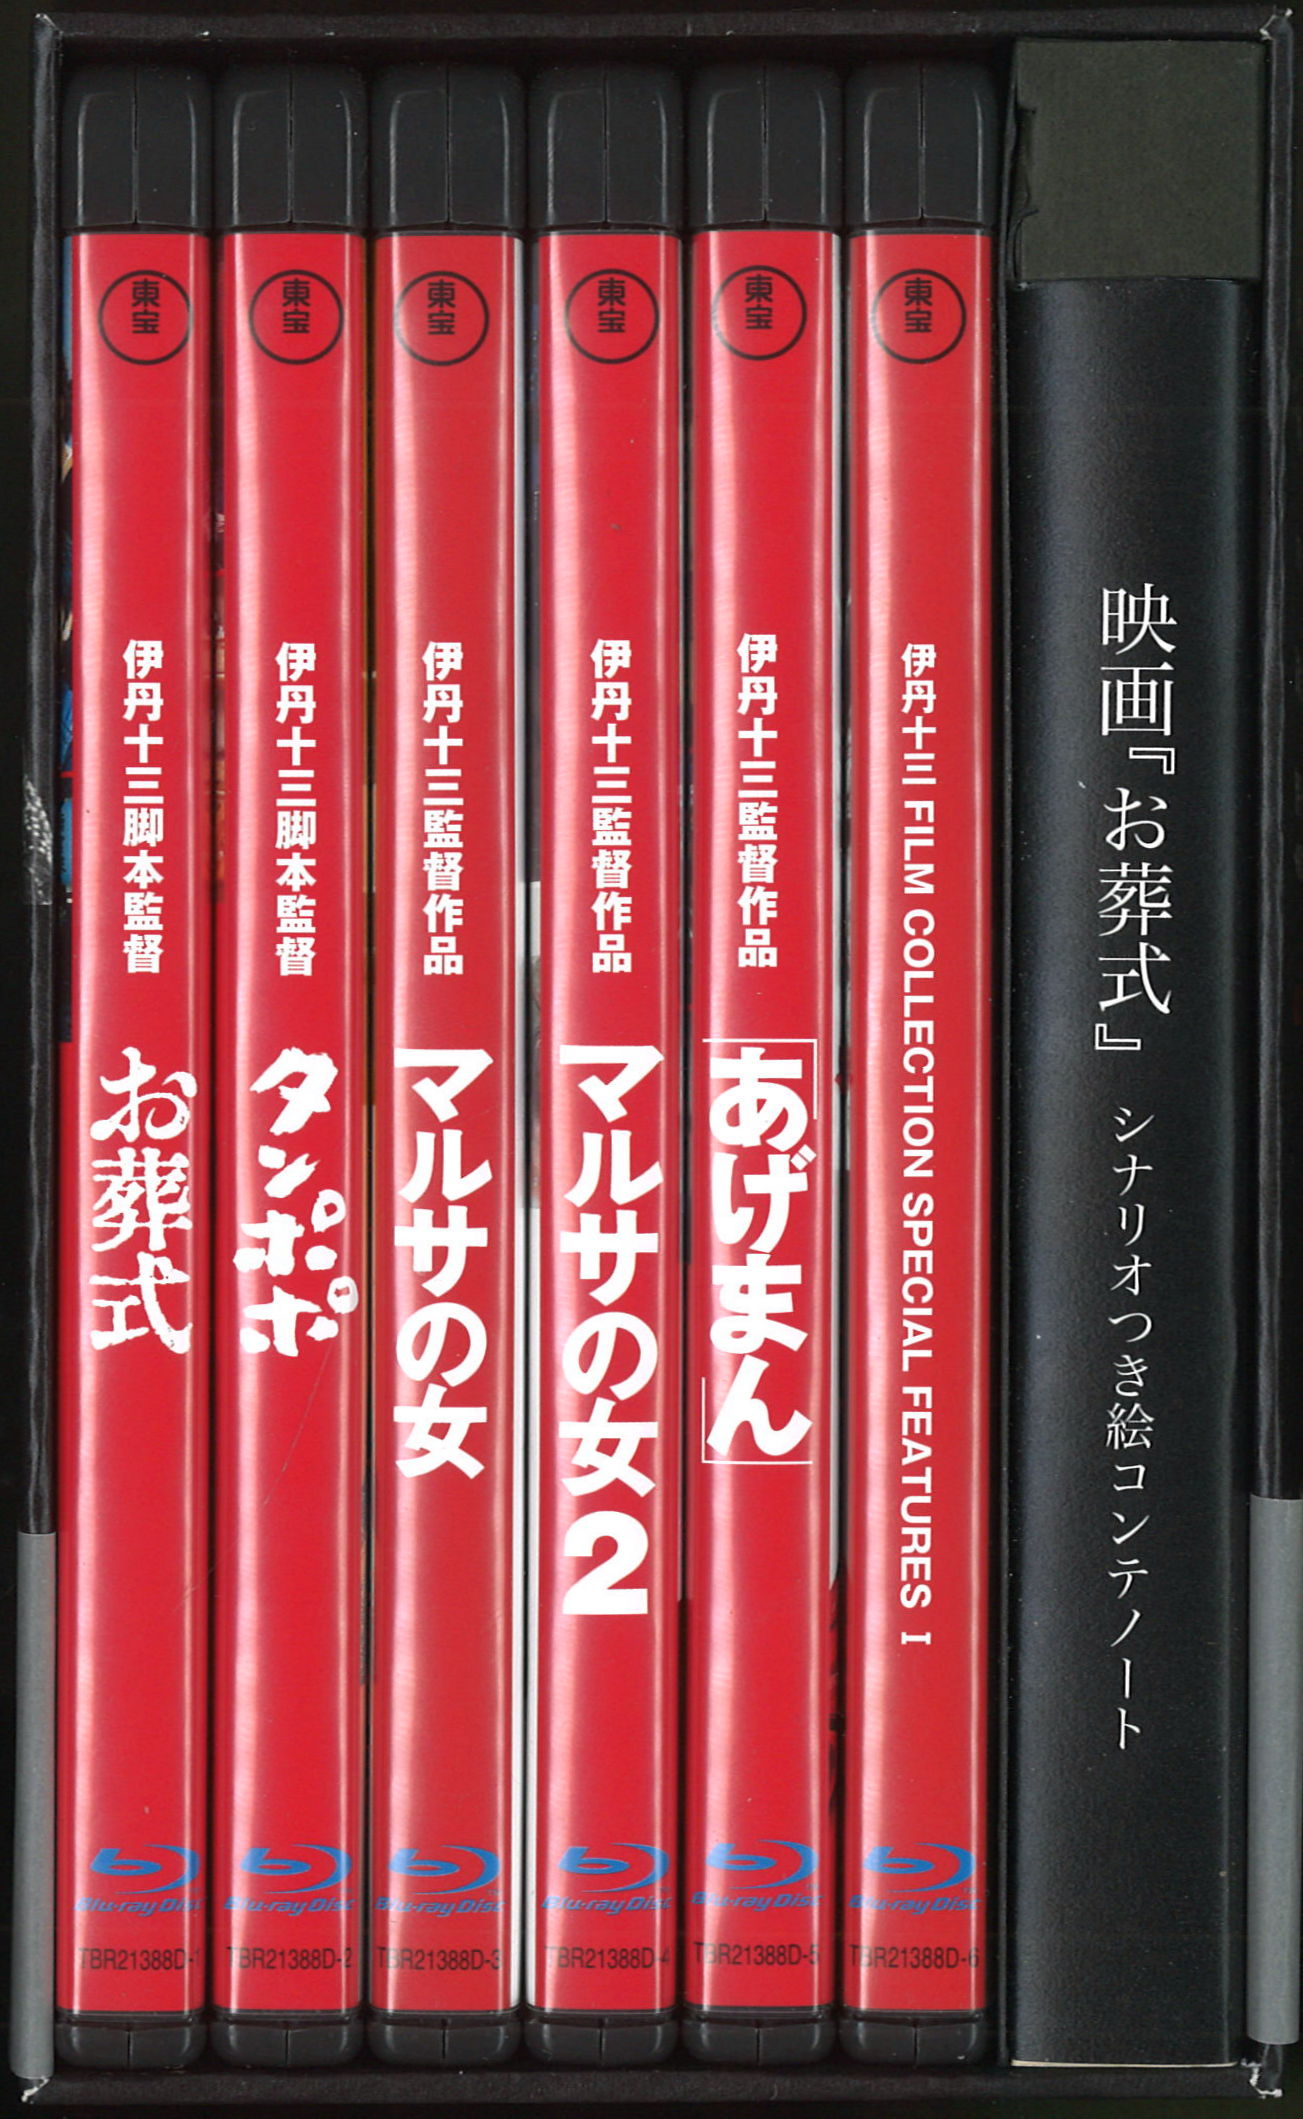 「伊丹十三 FILM COLLECTION Blu-ray BOX ⅠⅡ」袋付